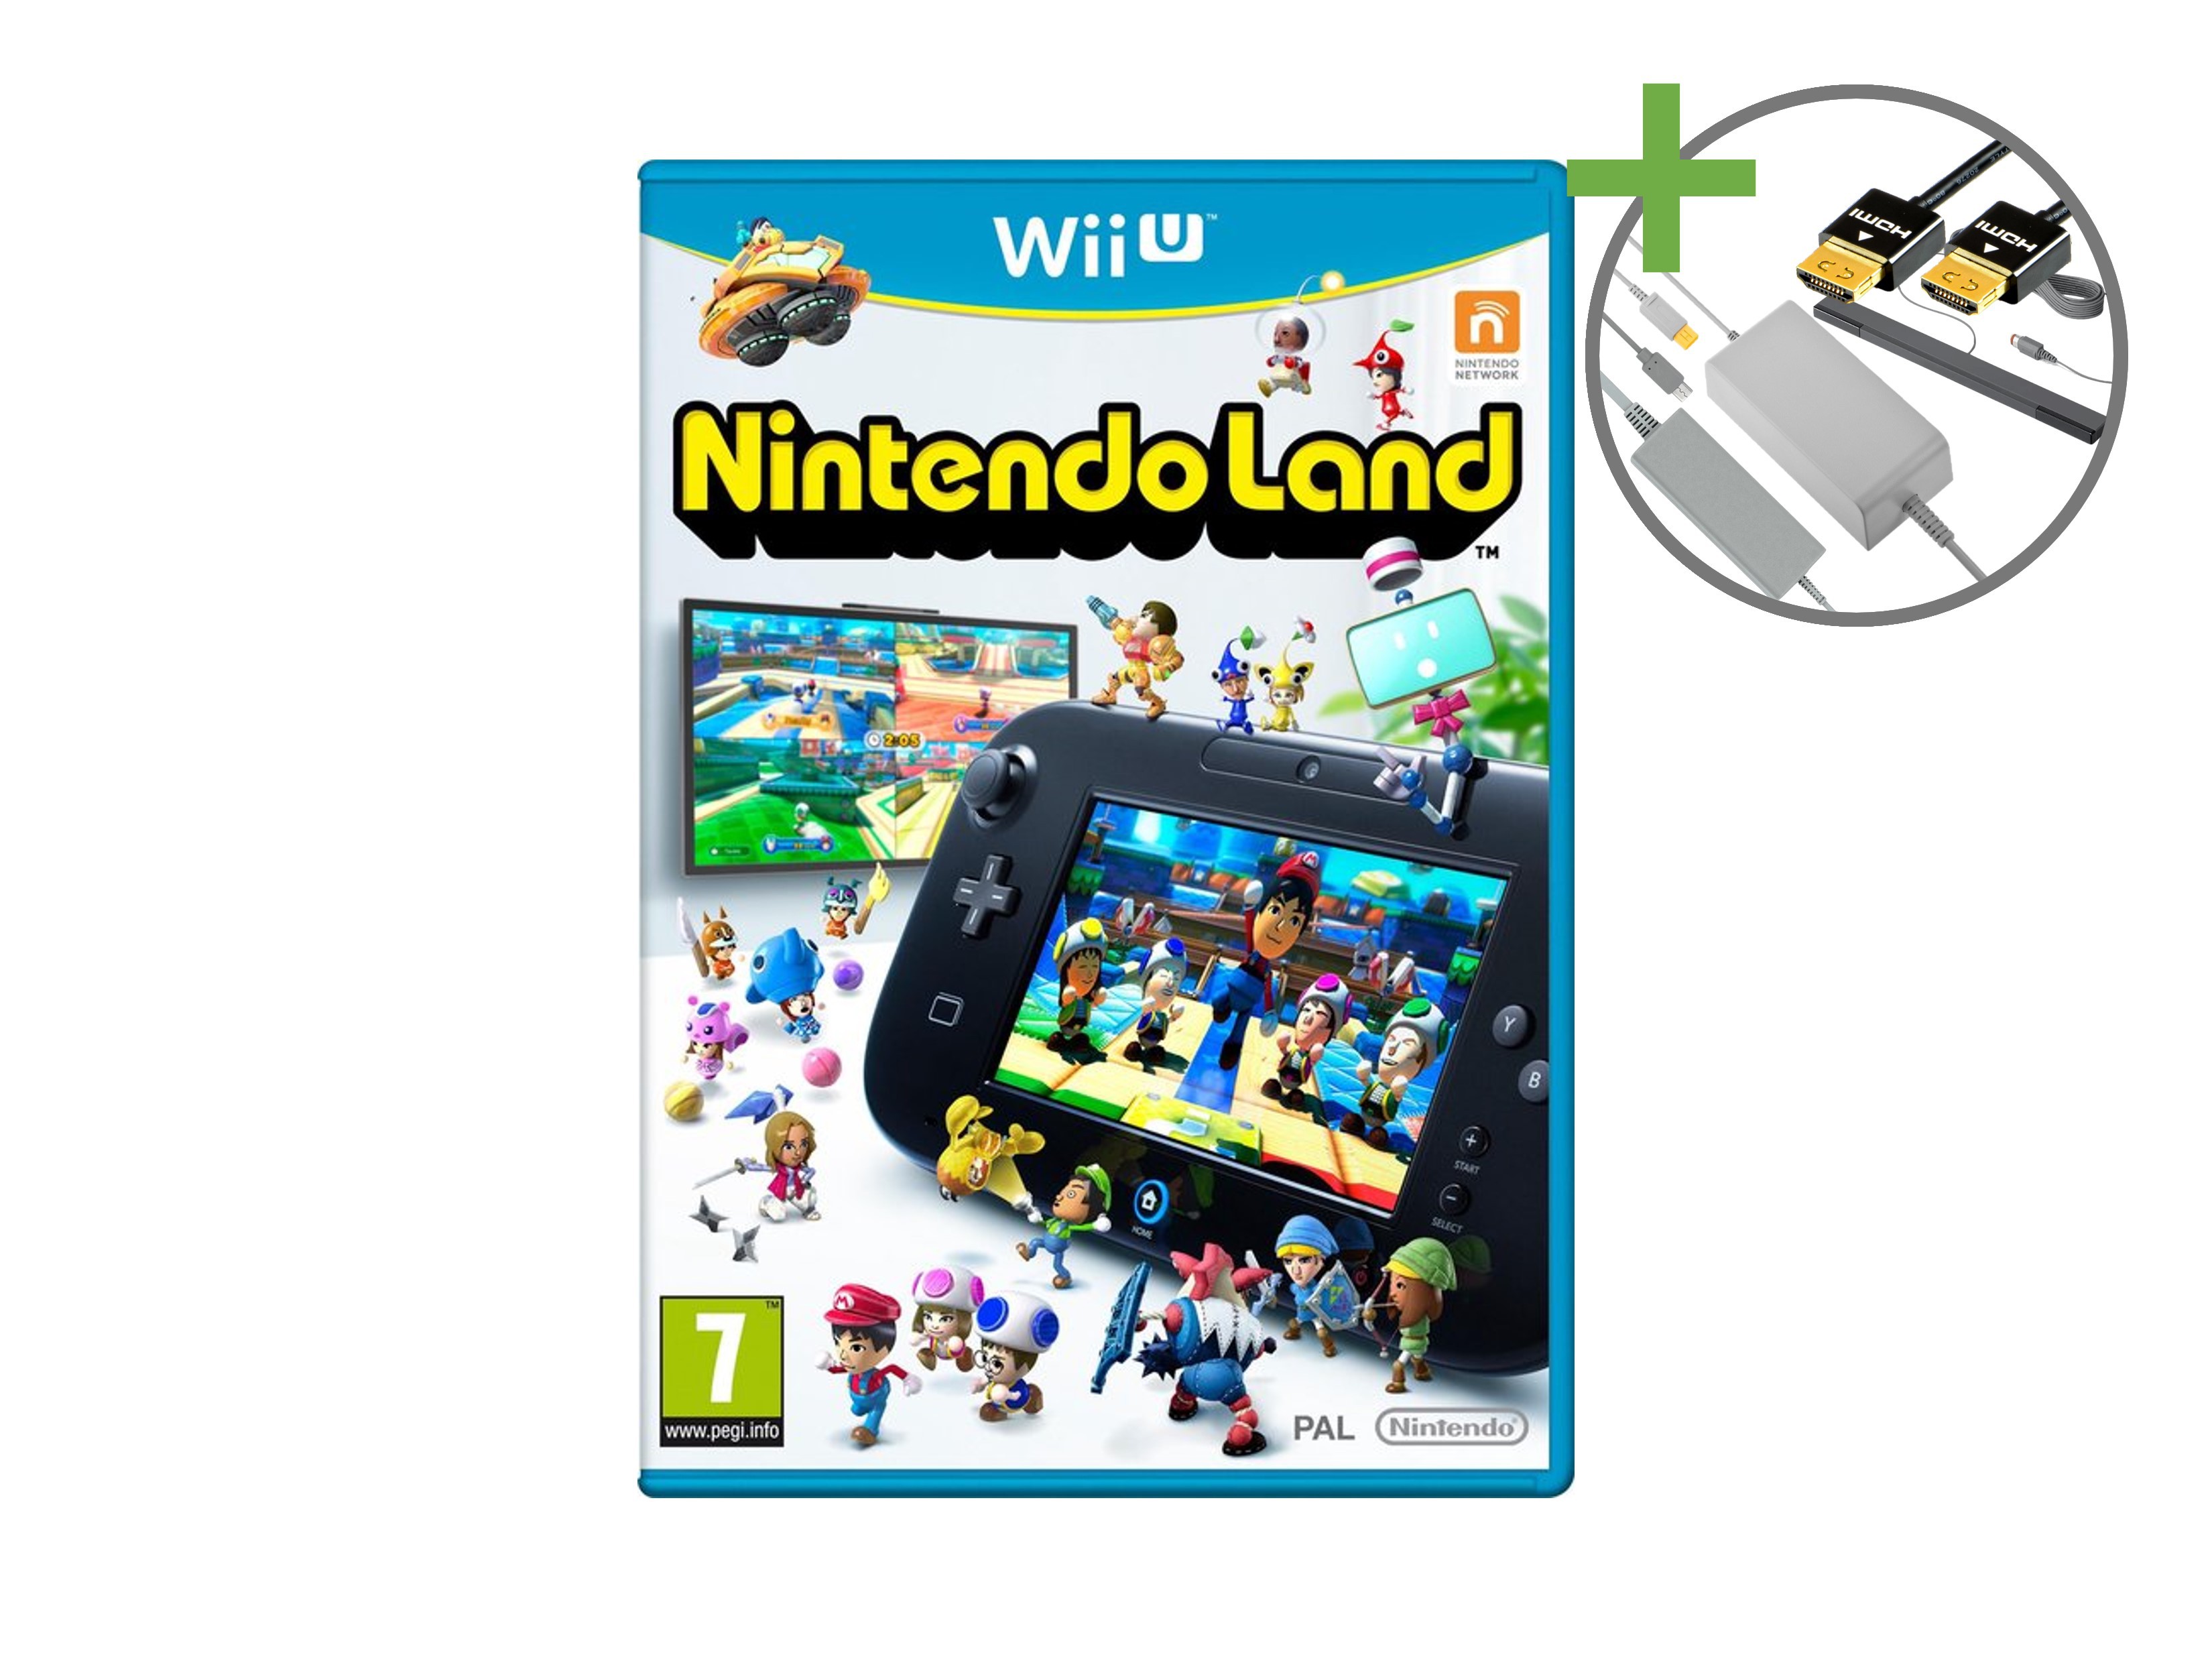 Nintendo Wii U Starter Pack - Deluxe Set Edition [Complete] - Wii U Hardware - 5